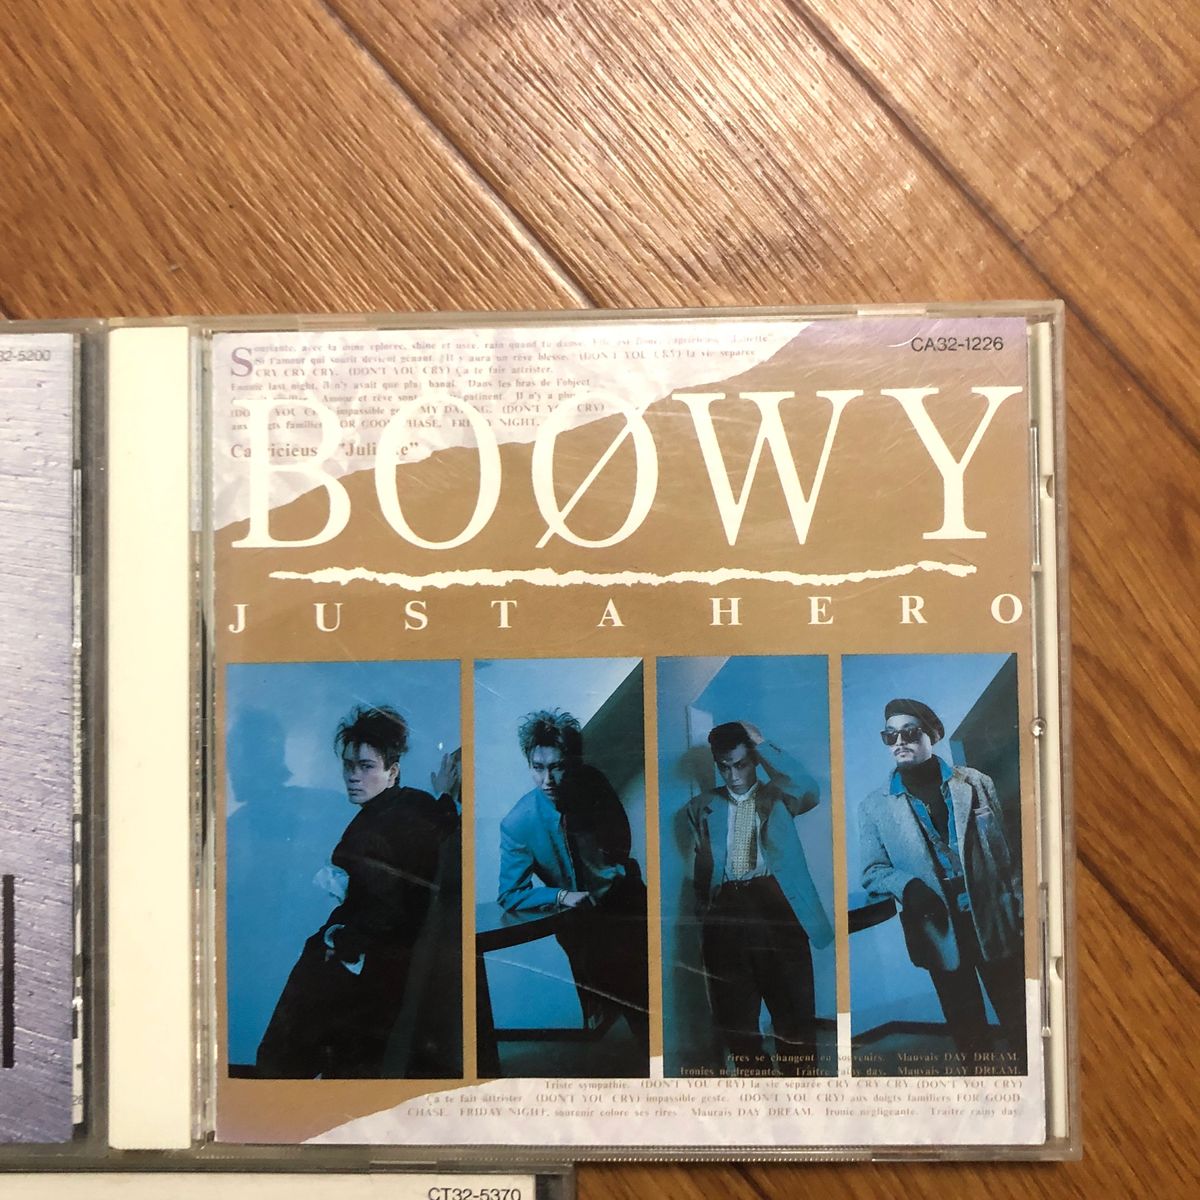 CD BOOWY LAST GIGS シングルベスト など3枚セット